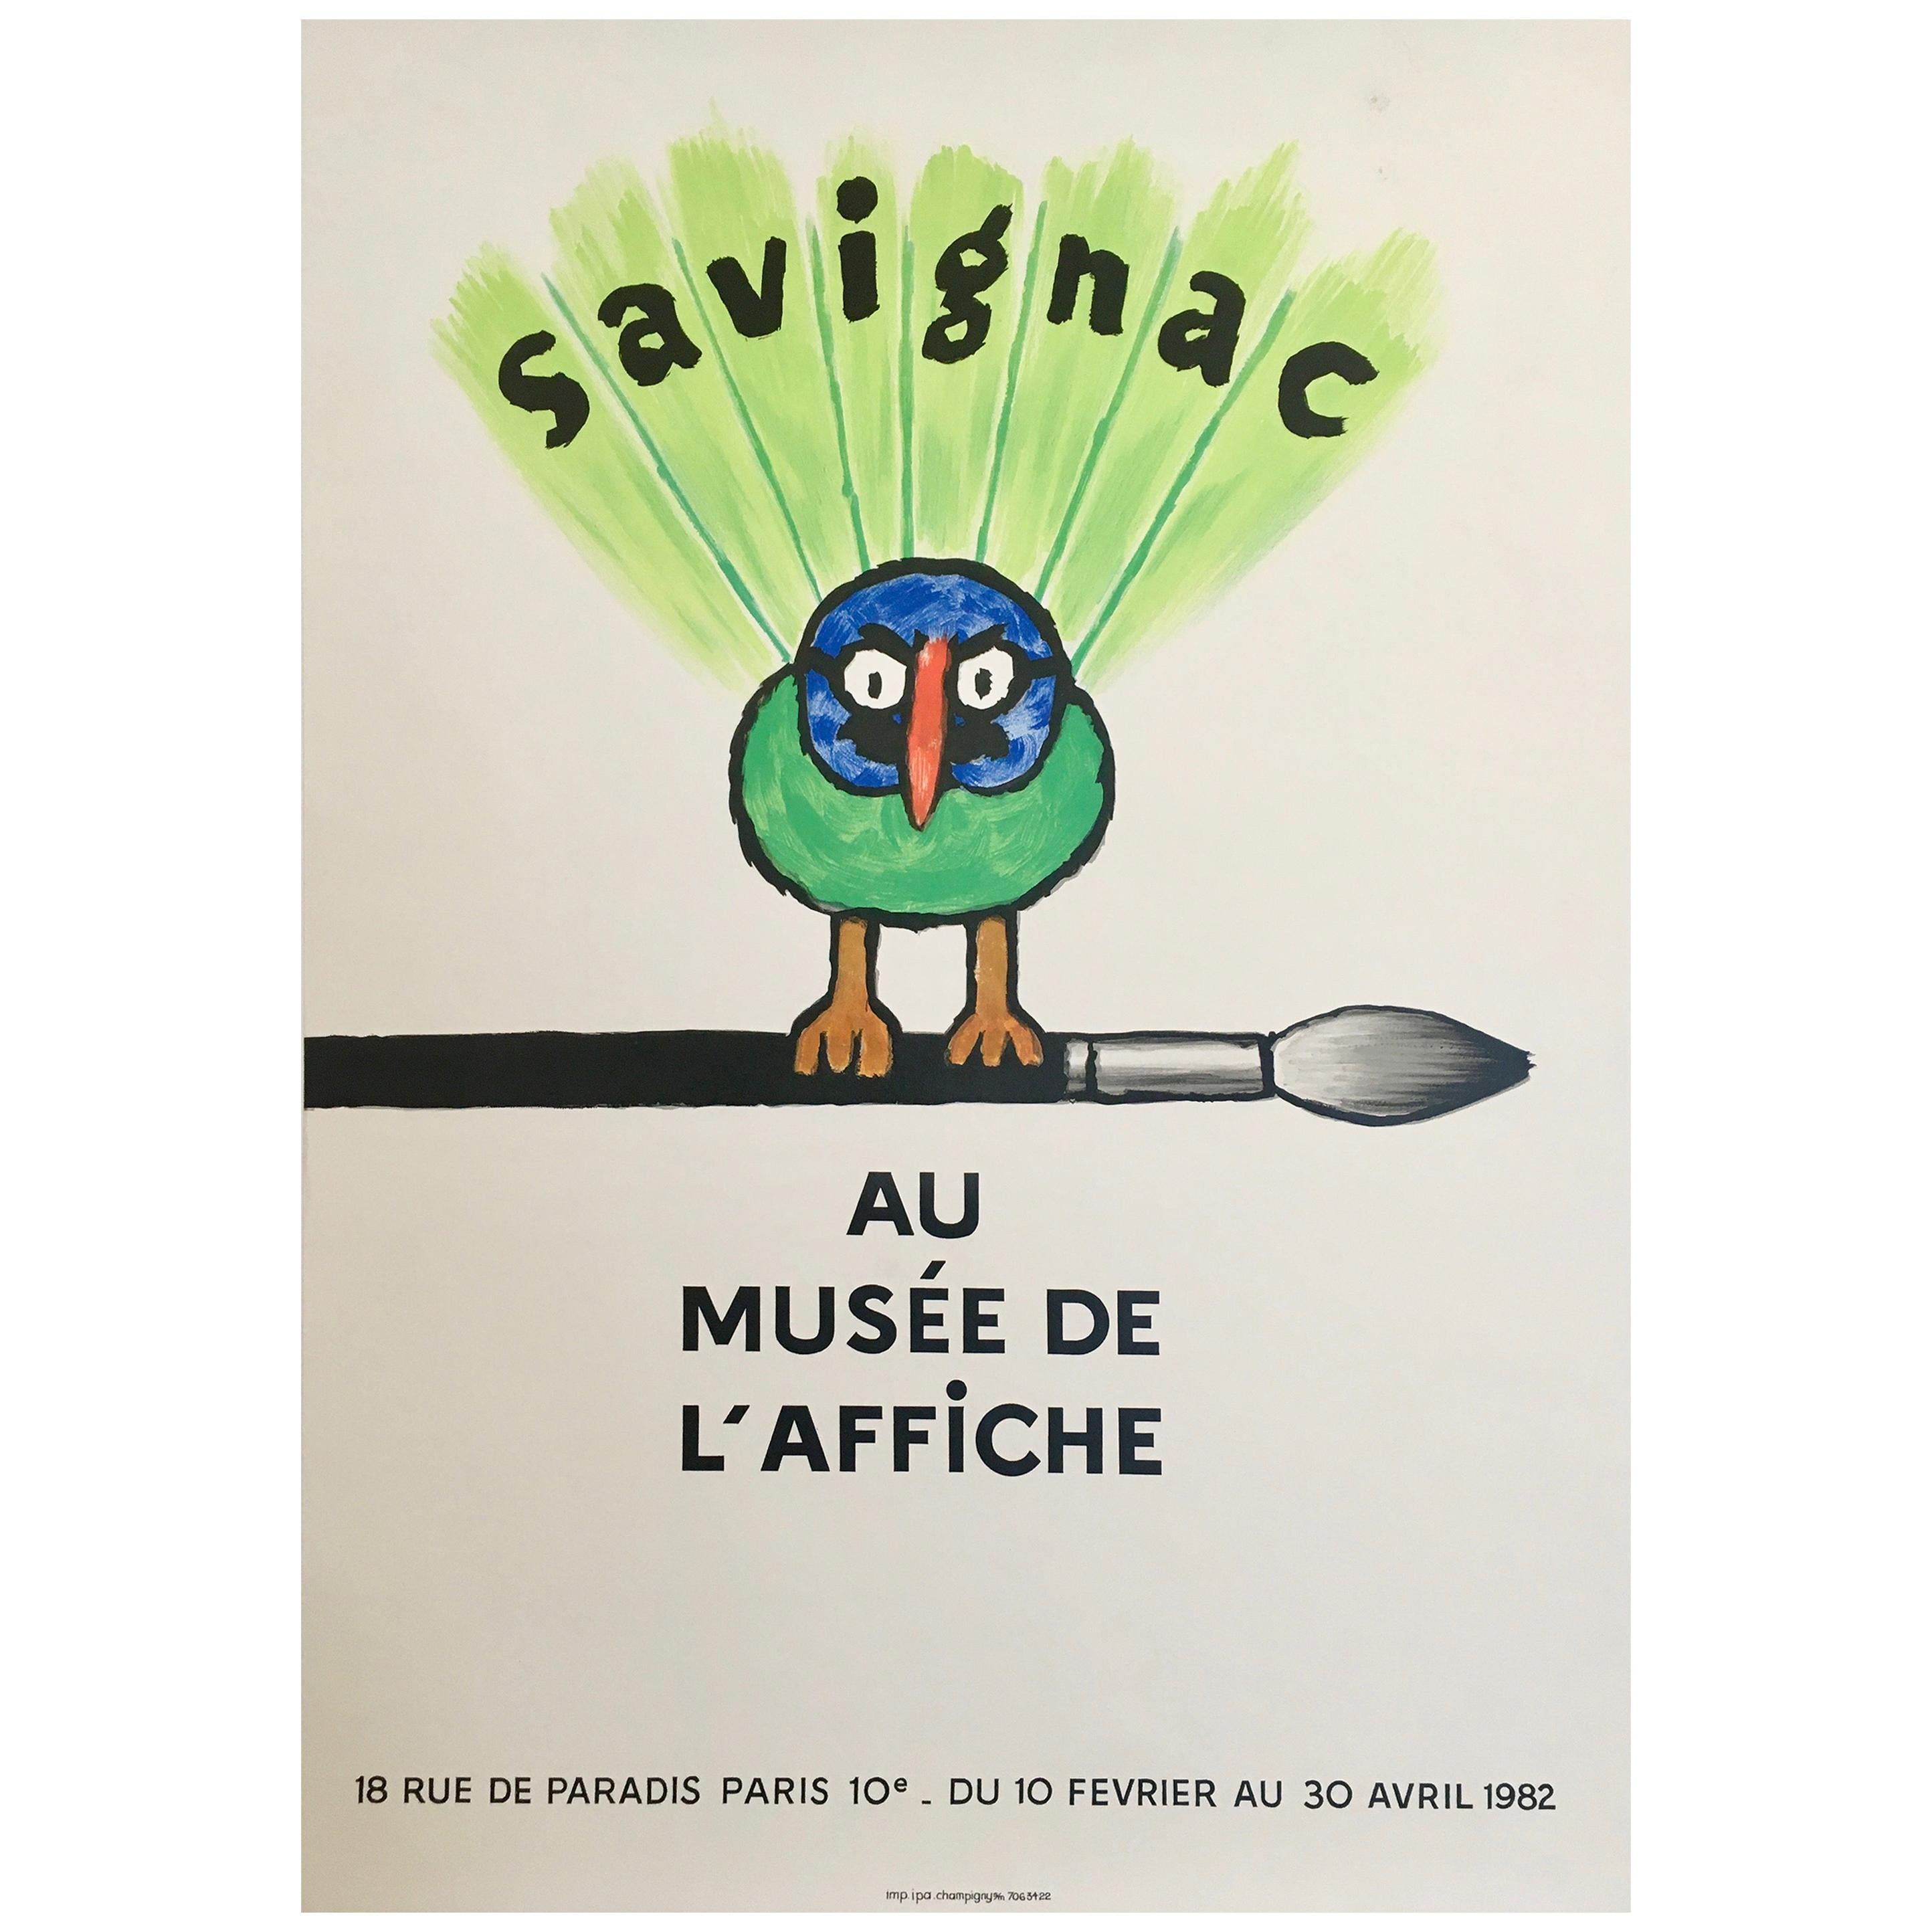 Savignac Bird 'Au Musee De L'Affich' Original Vintage French Exhibition Poster